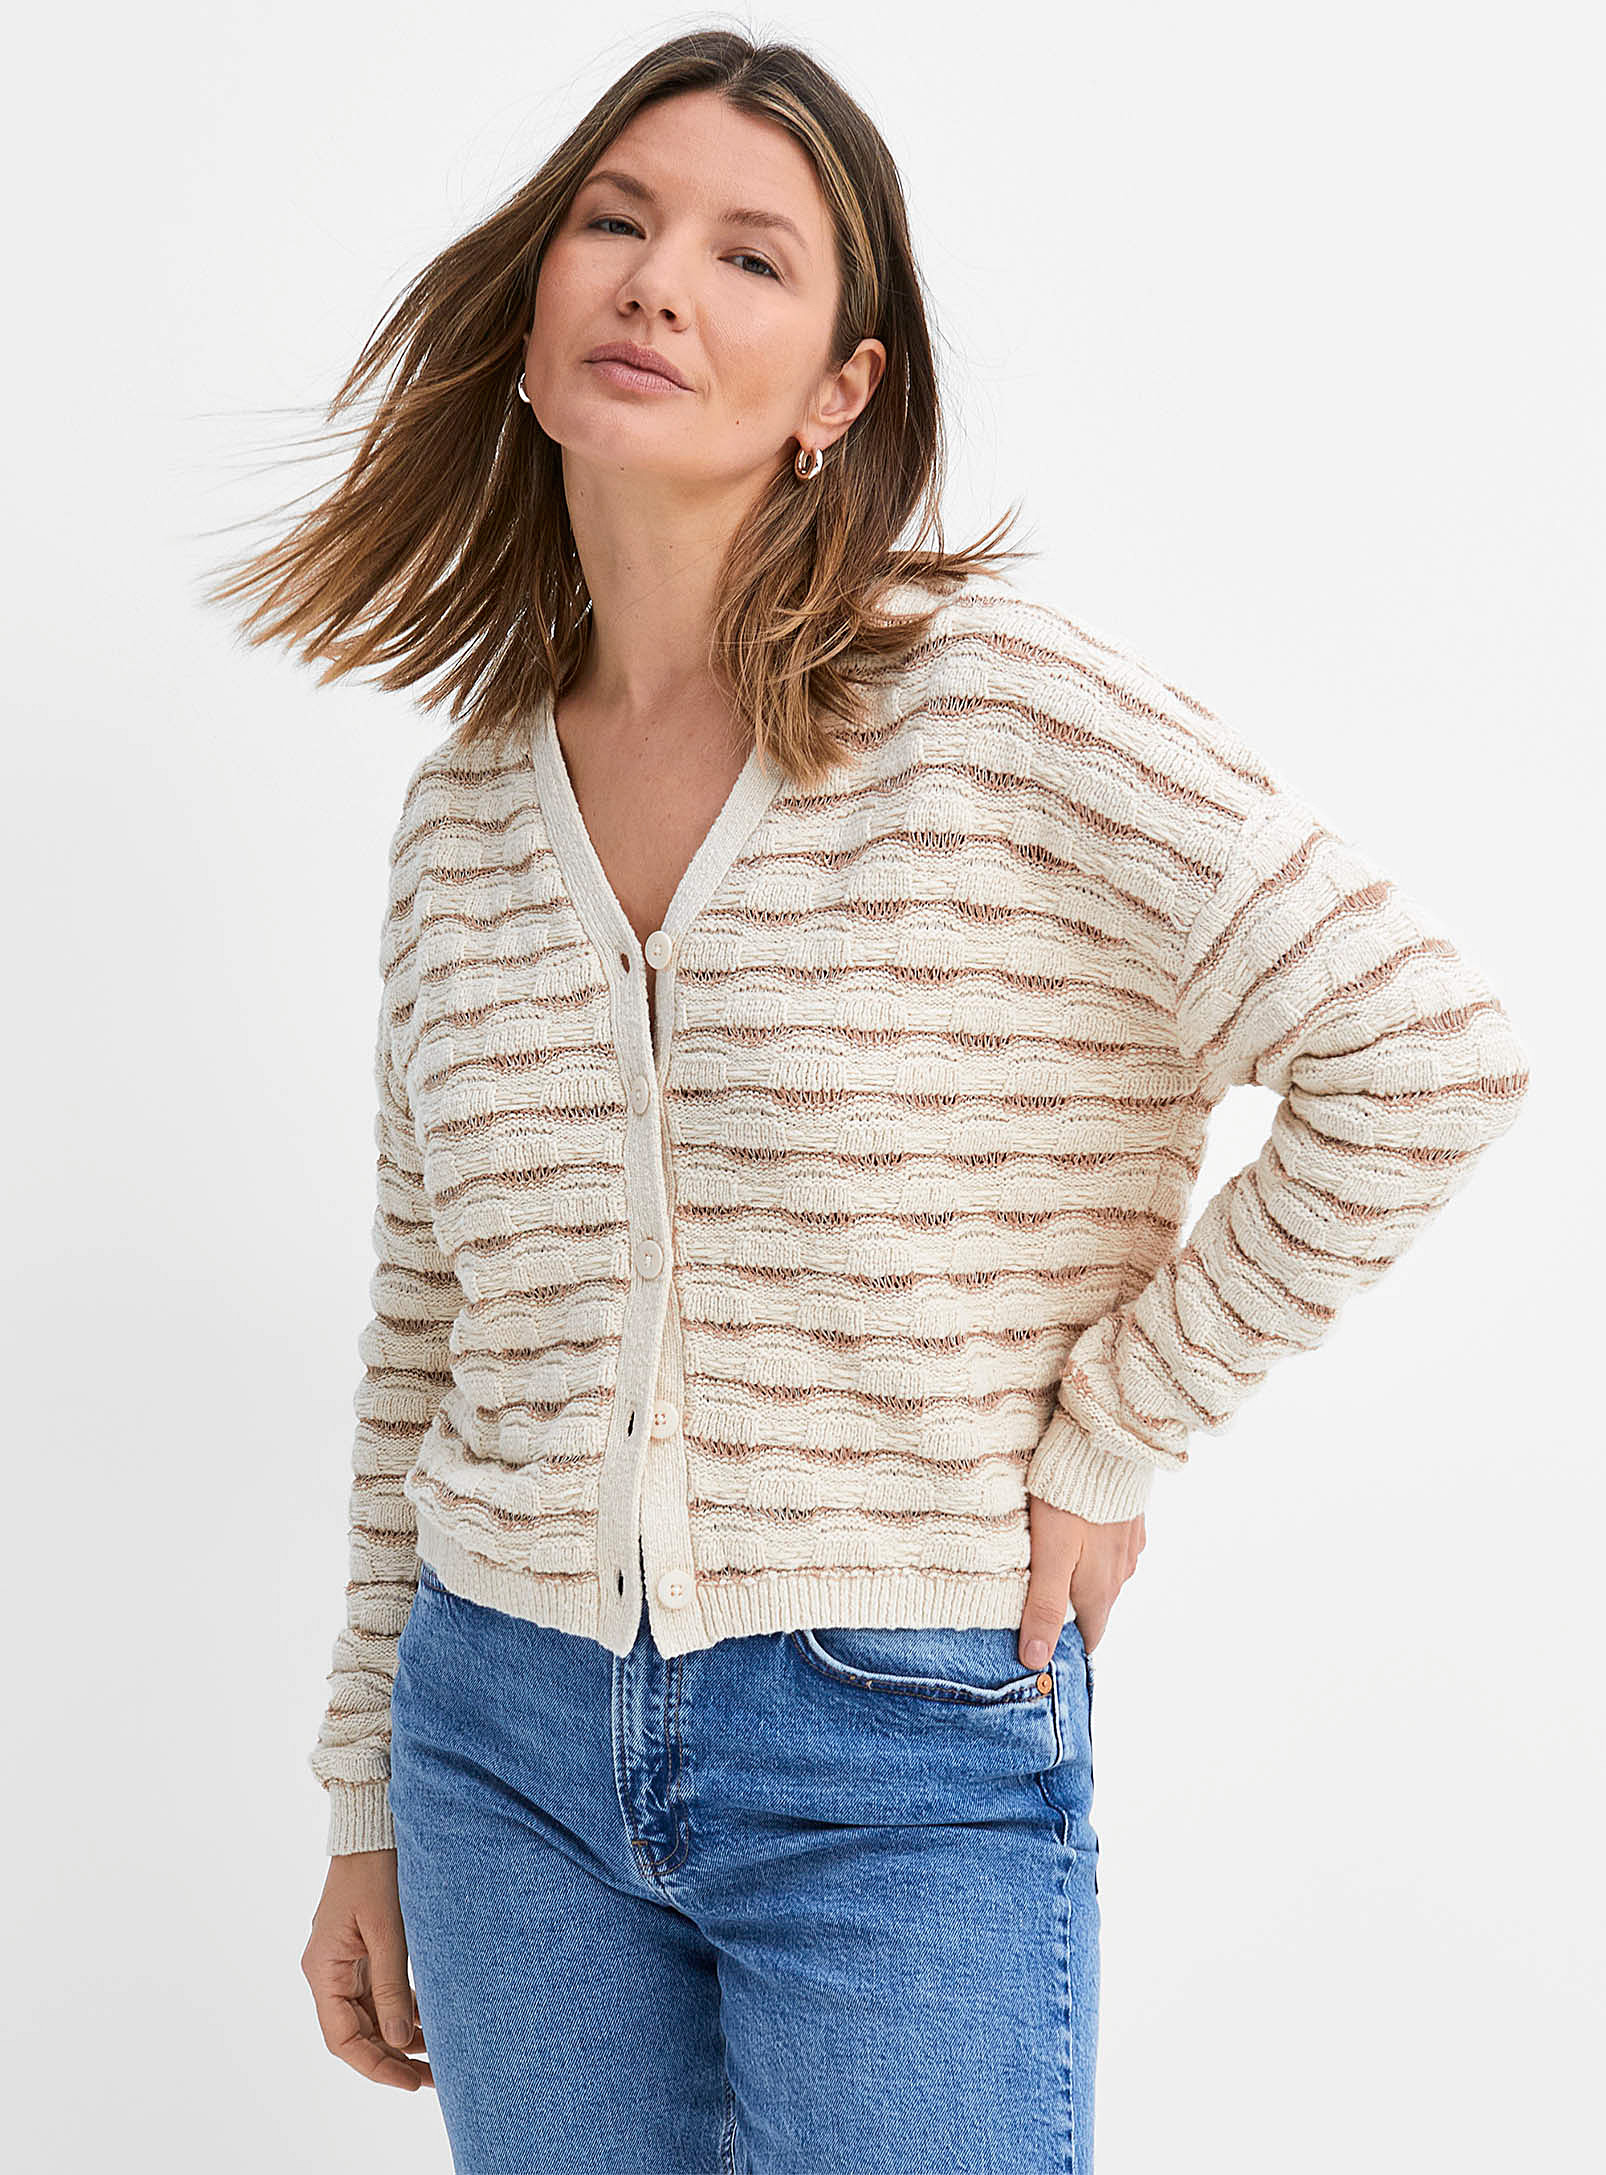 Contemporaine - Women's Sparkling touch textured Cardigan Sweater